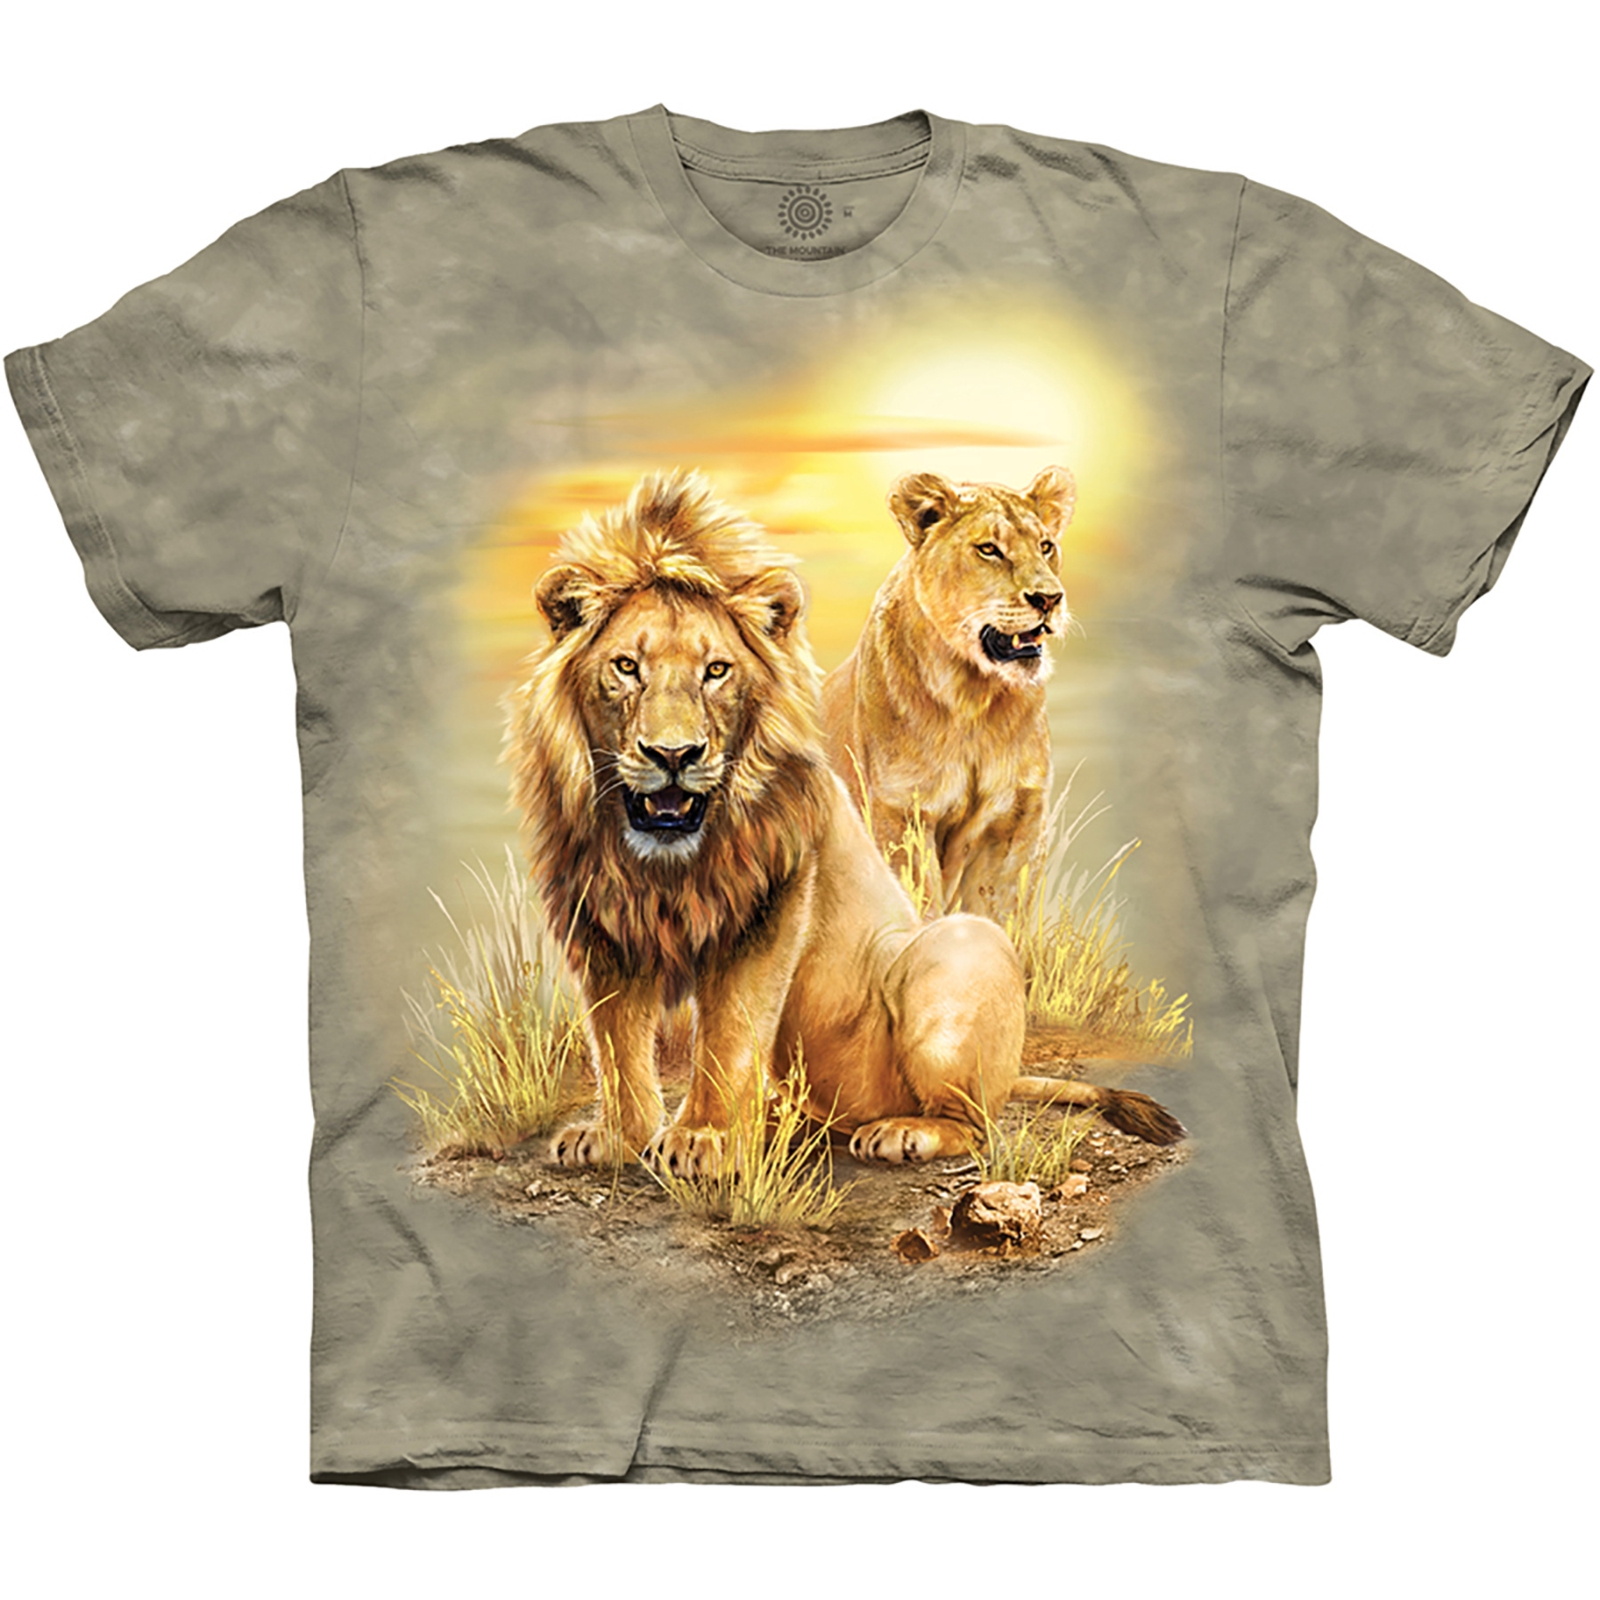 The Mountain Lion Pair T-Shirt (Sm - XL) 